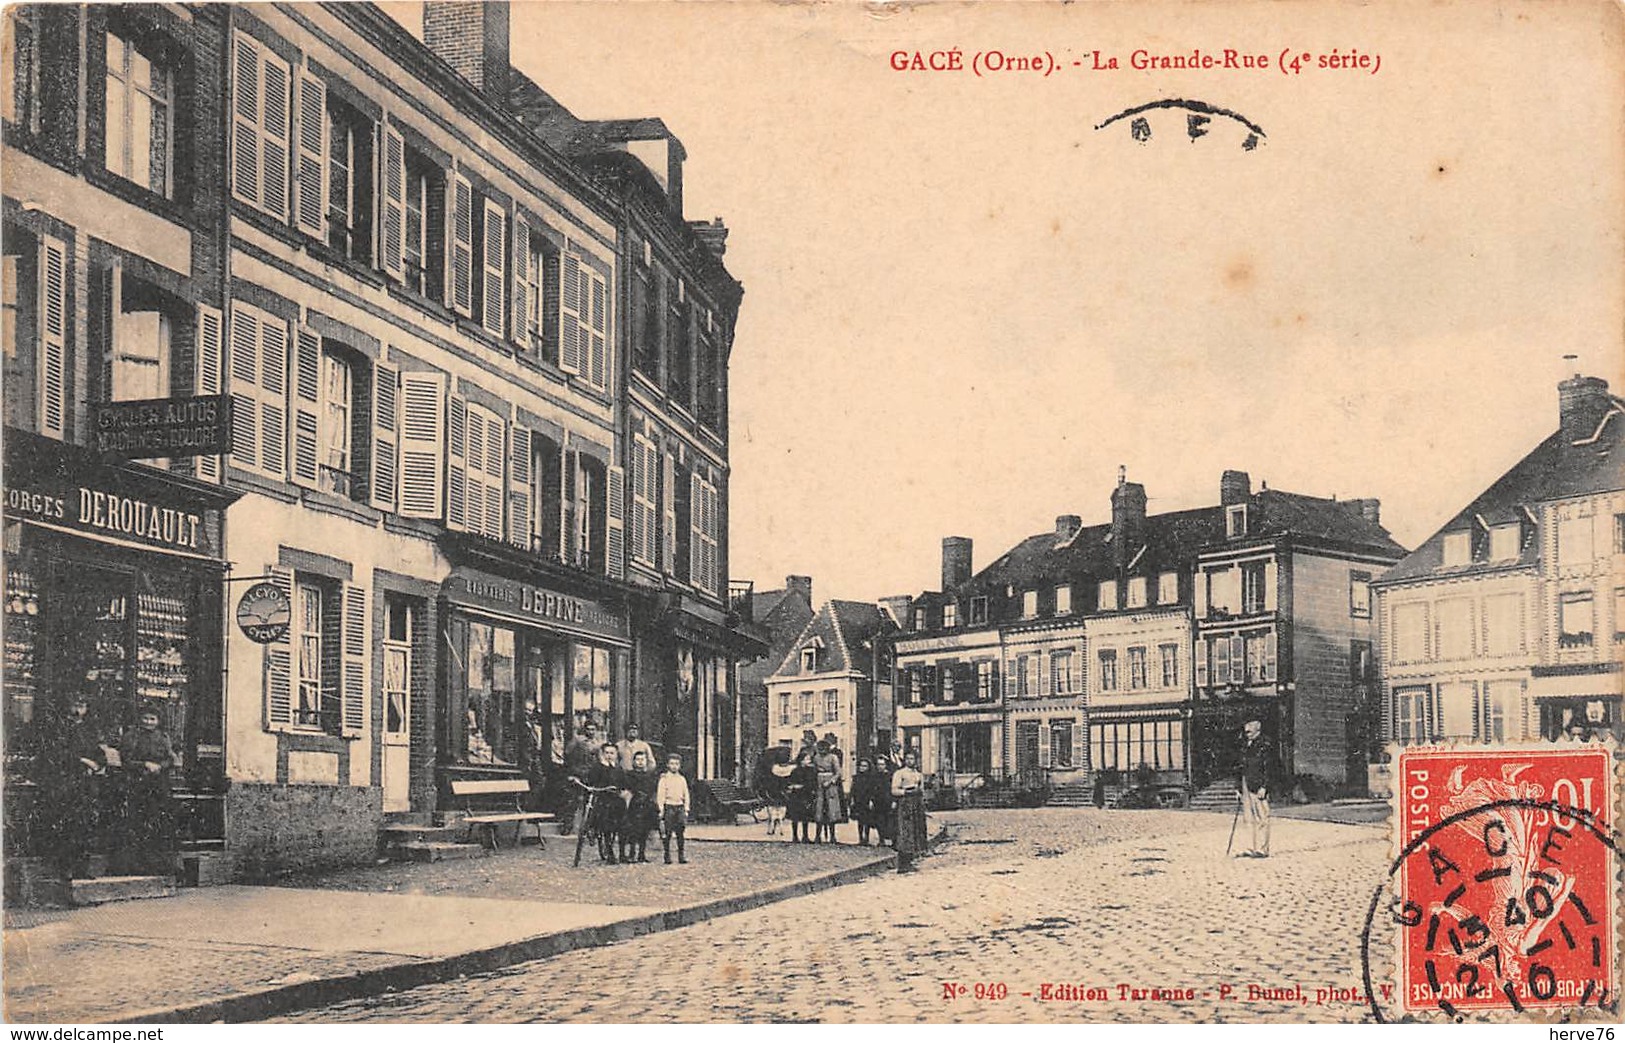 GACE - La Grande Rue - Gace